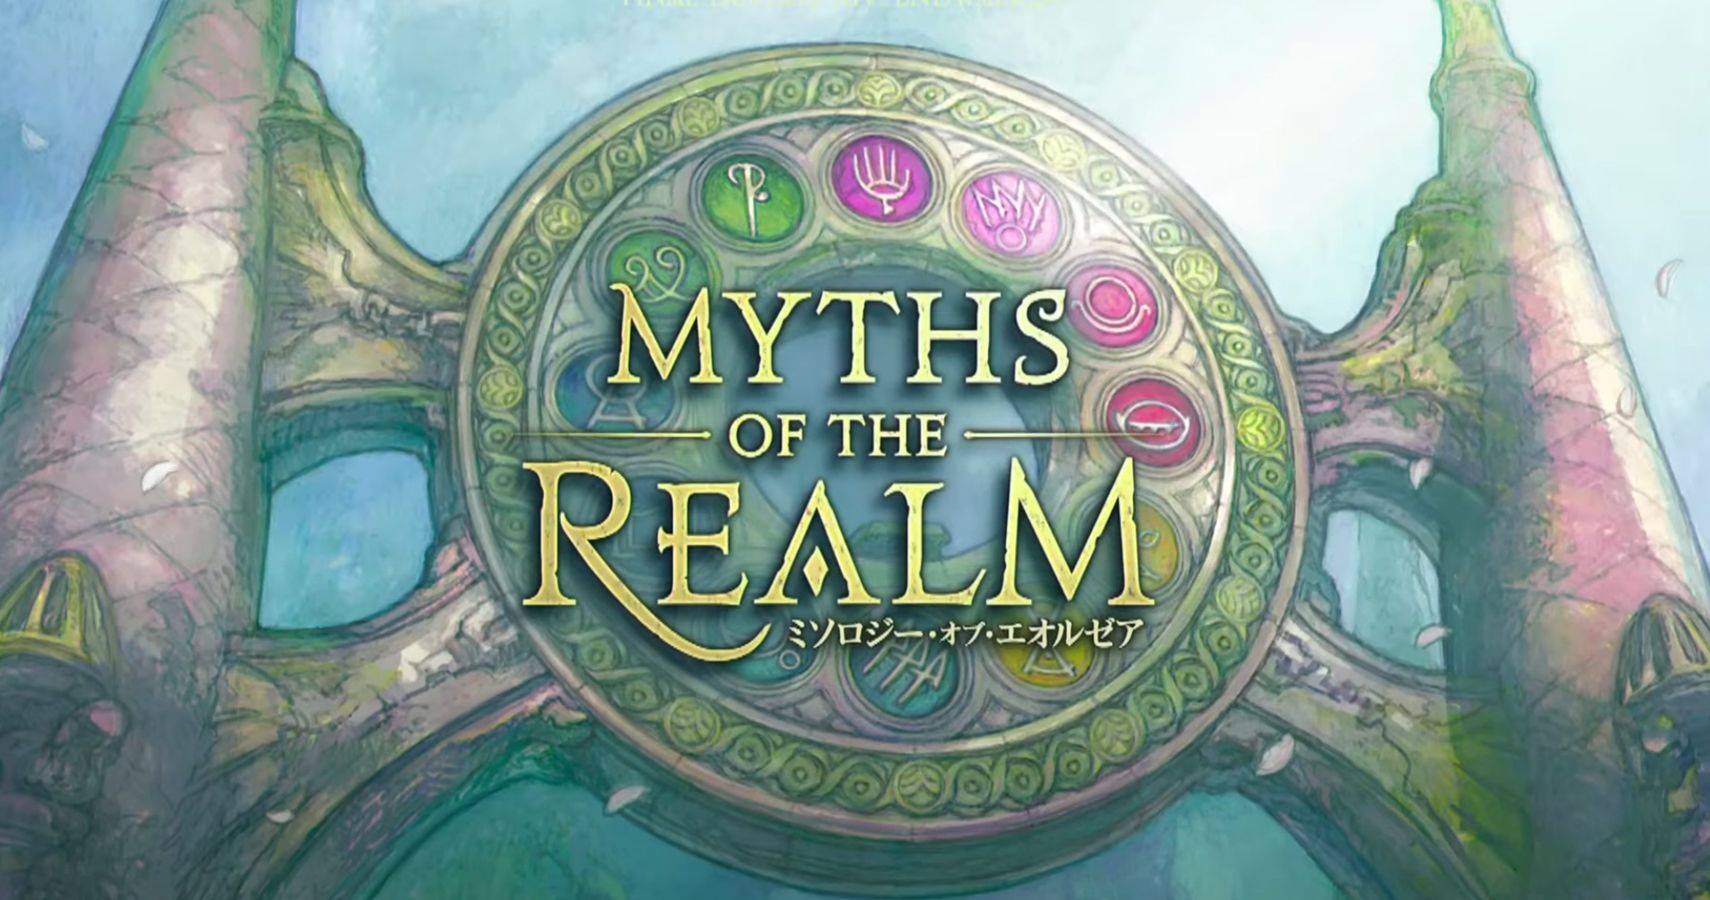 Key art for Final Fantasy 14's new alliance raid, Myths of the Realm